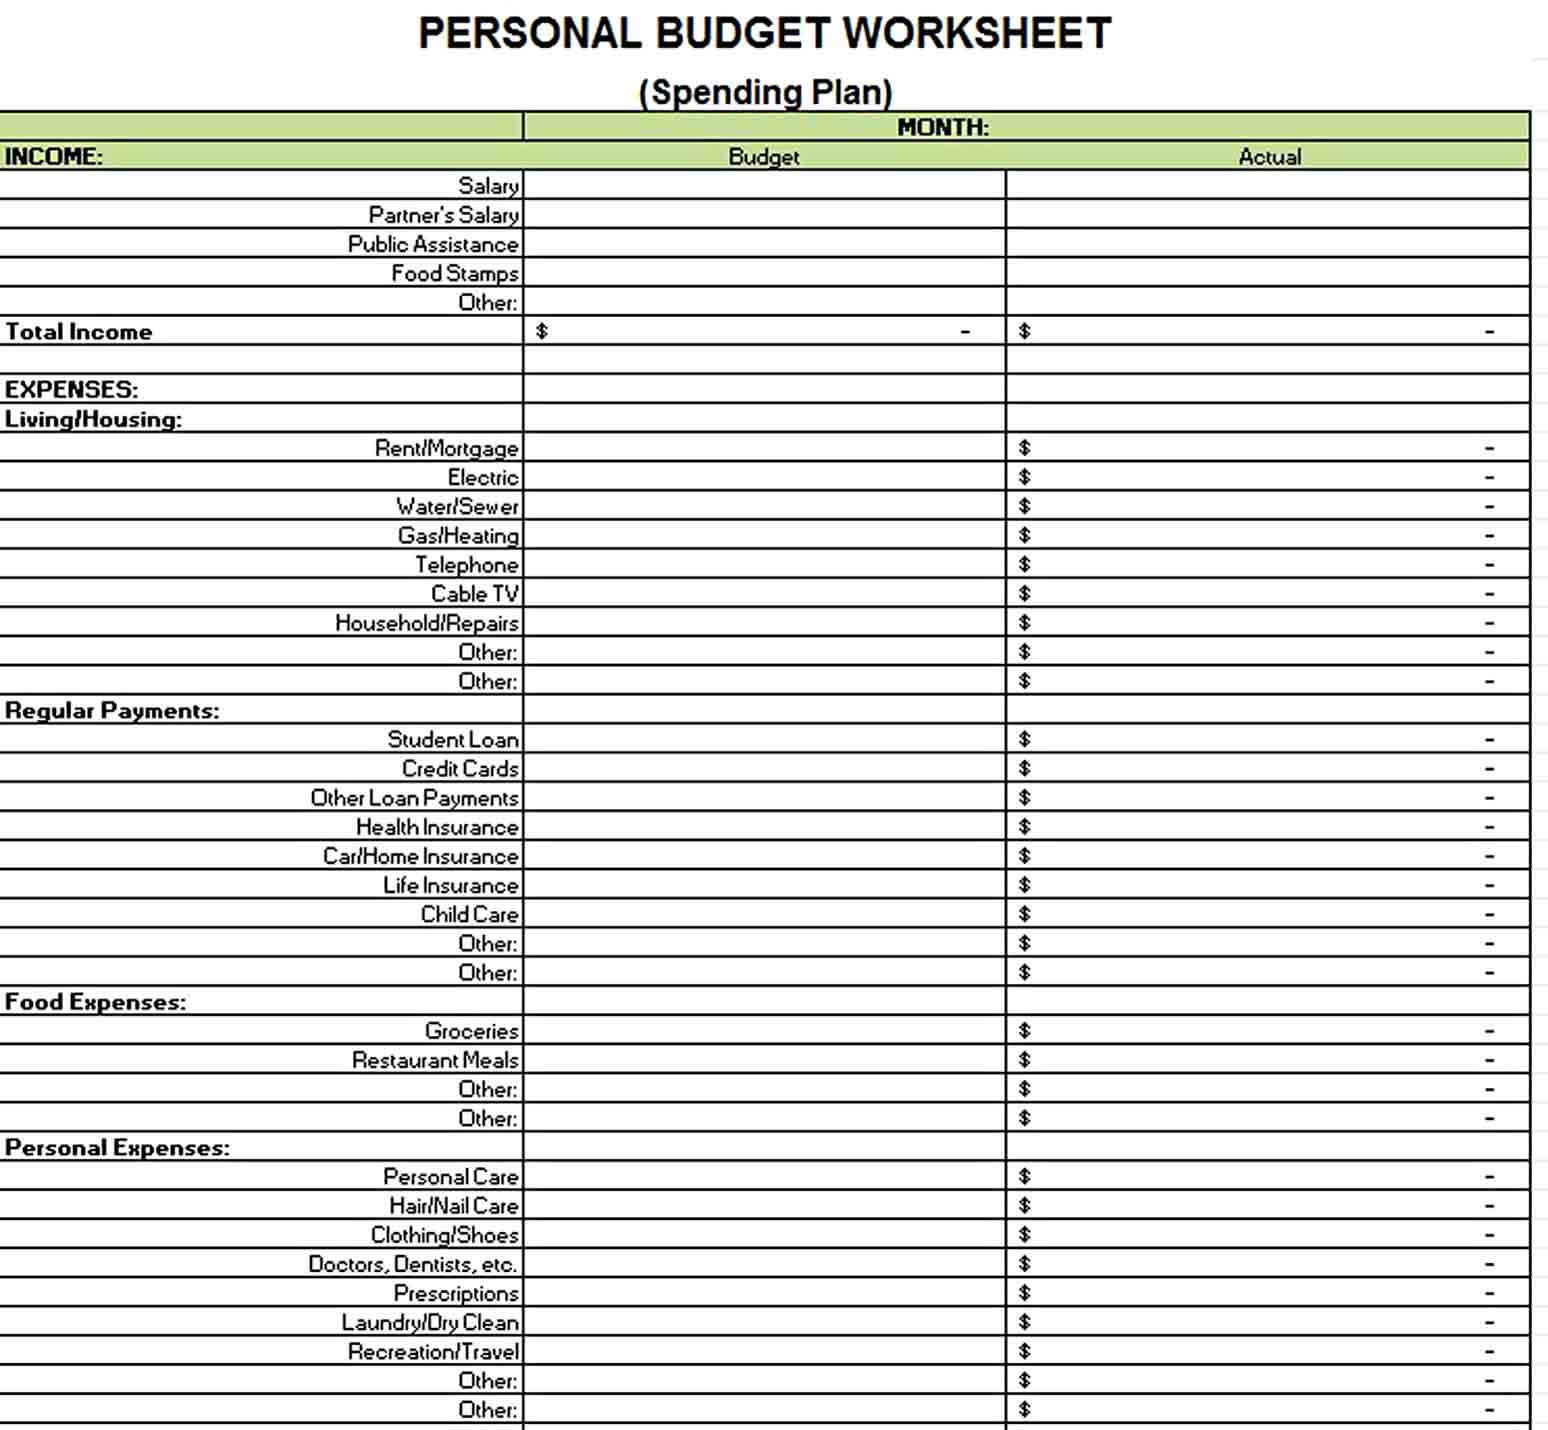 Personal Budget Weekly Expenses Worksheet